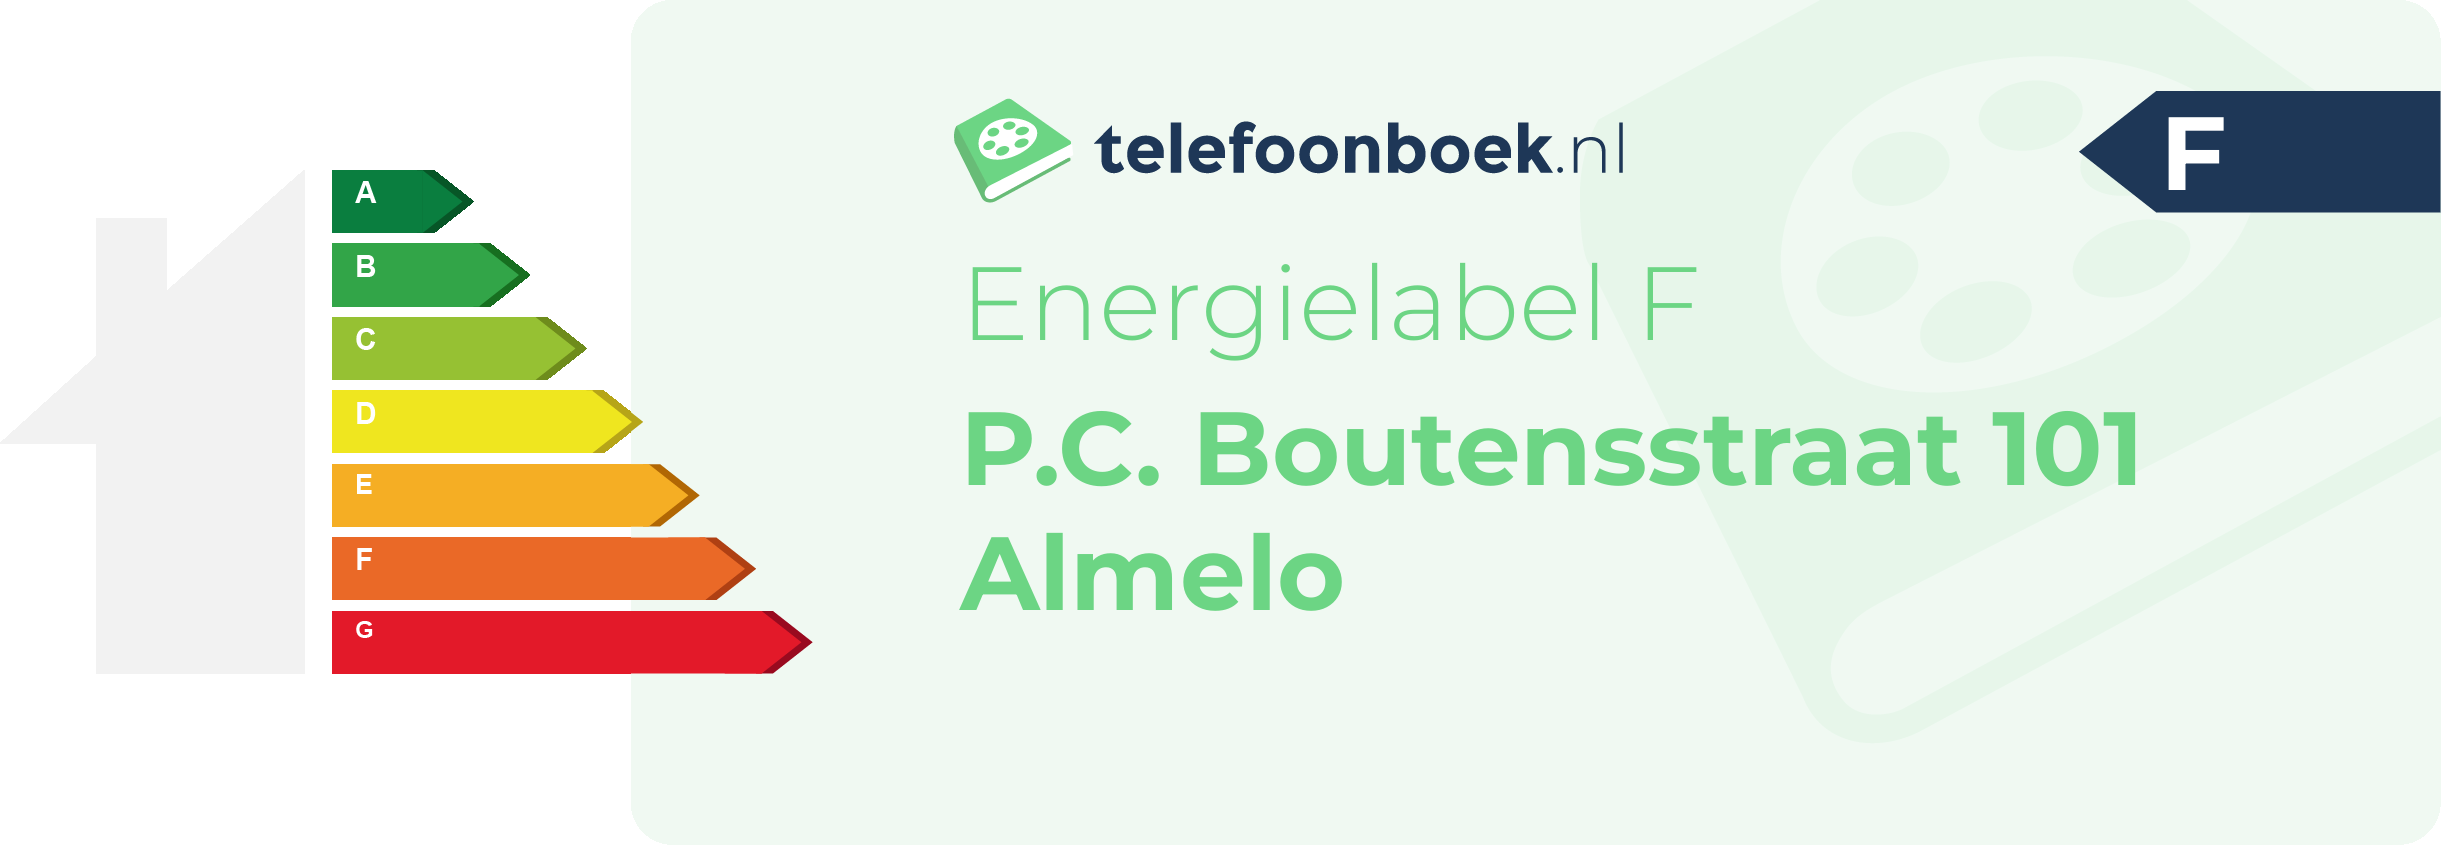 Energielabel P.C. Boutensstraat 101 Almelo